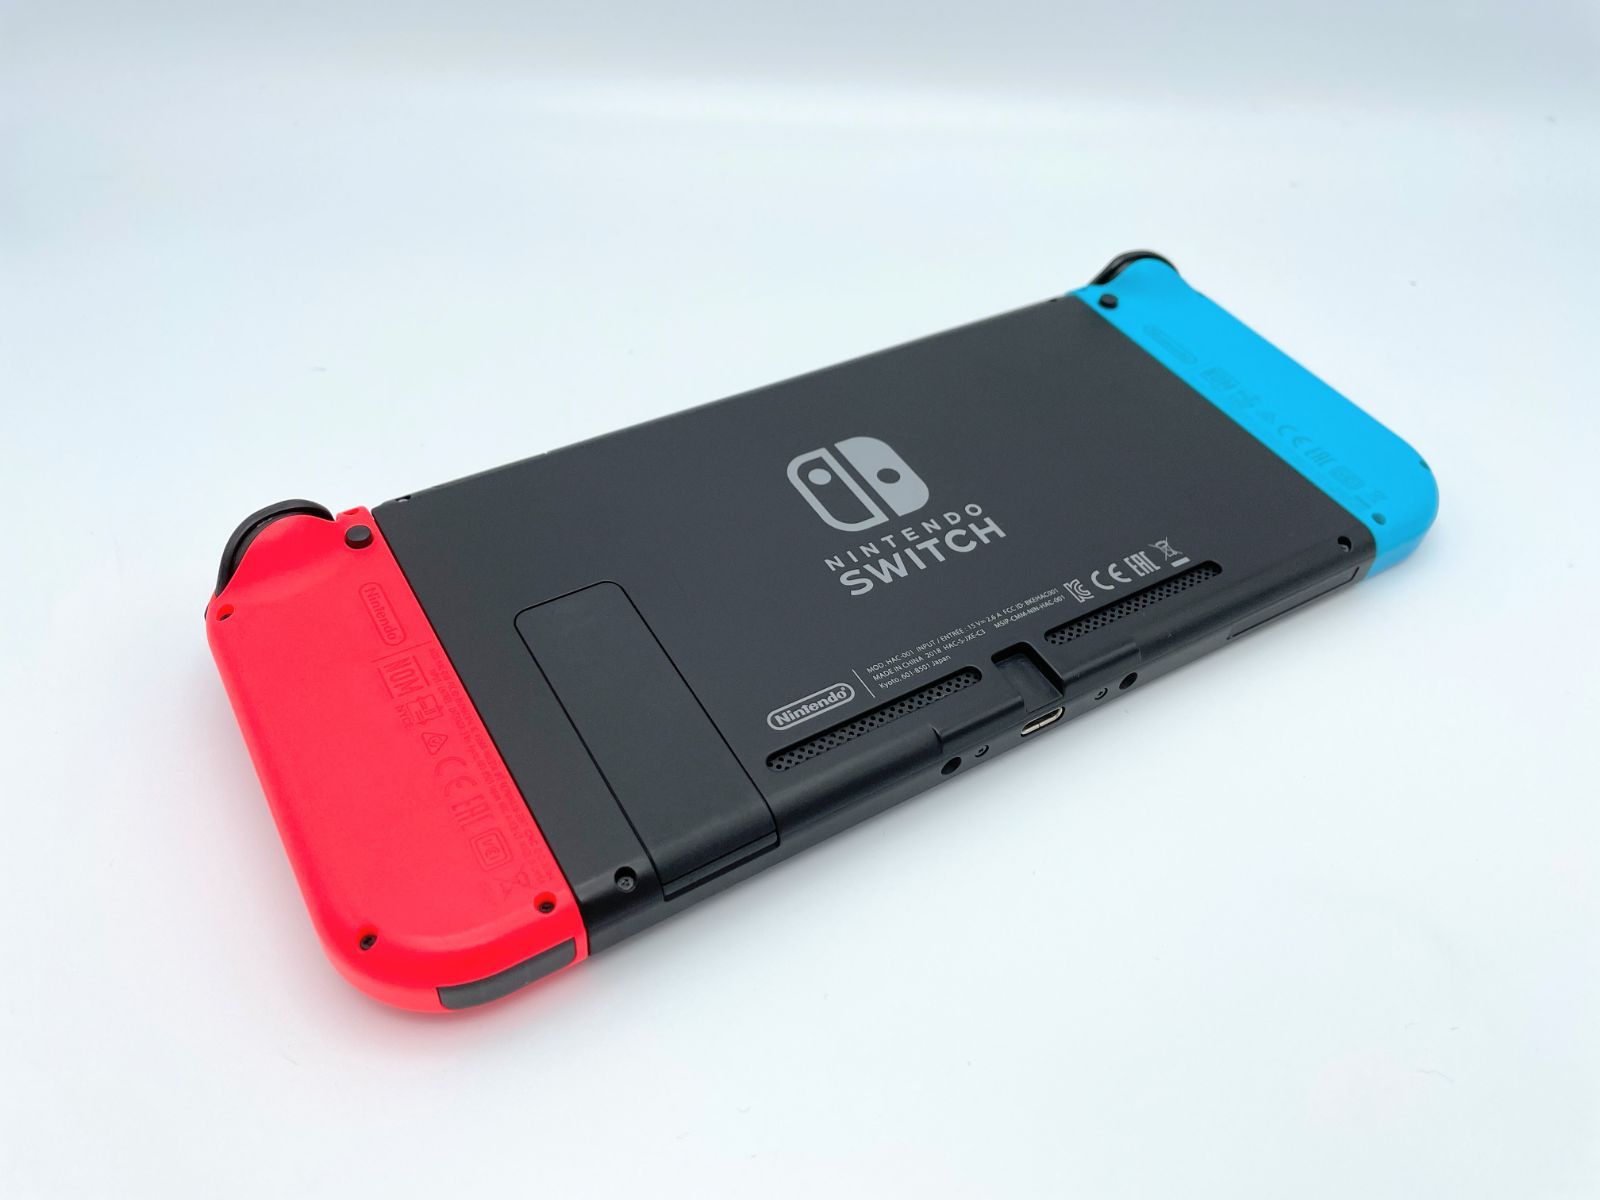 Nintendo Switch Joy-Con(L) ネオンブルー/(R) ネオンレッド